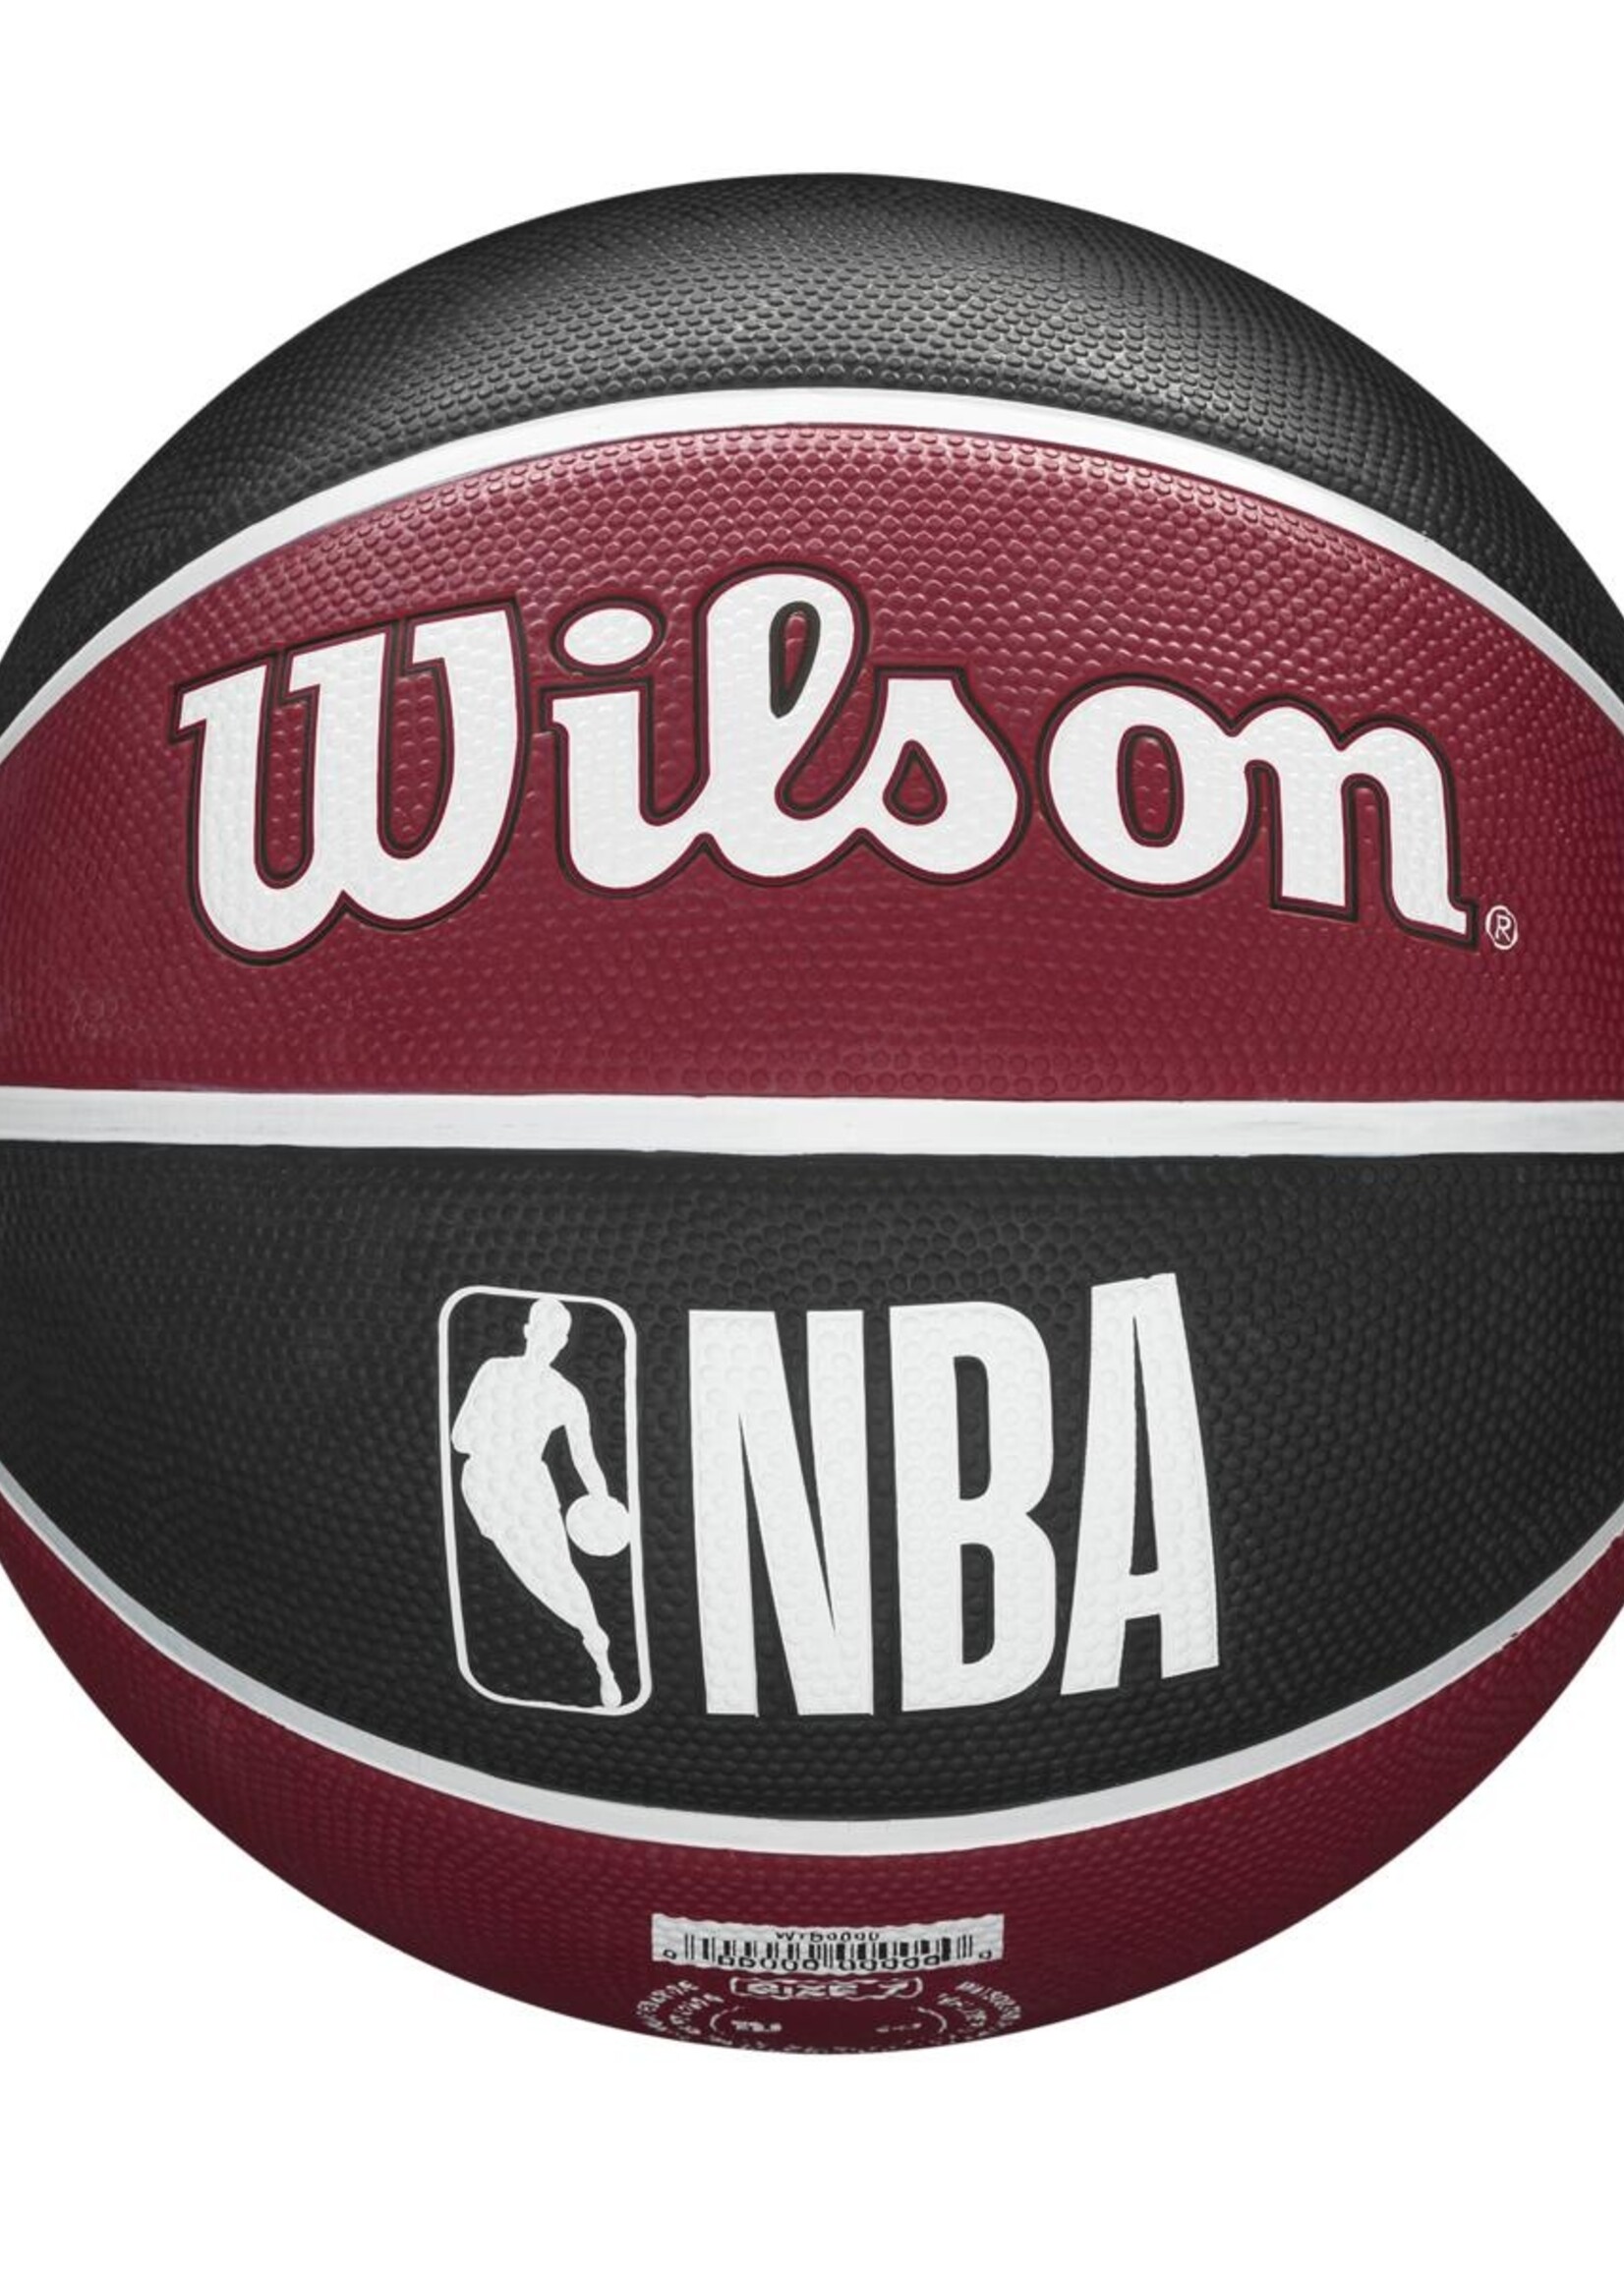 Wilson Wilson NBA MIAMI HEAT Tribut Basketball (7)